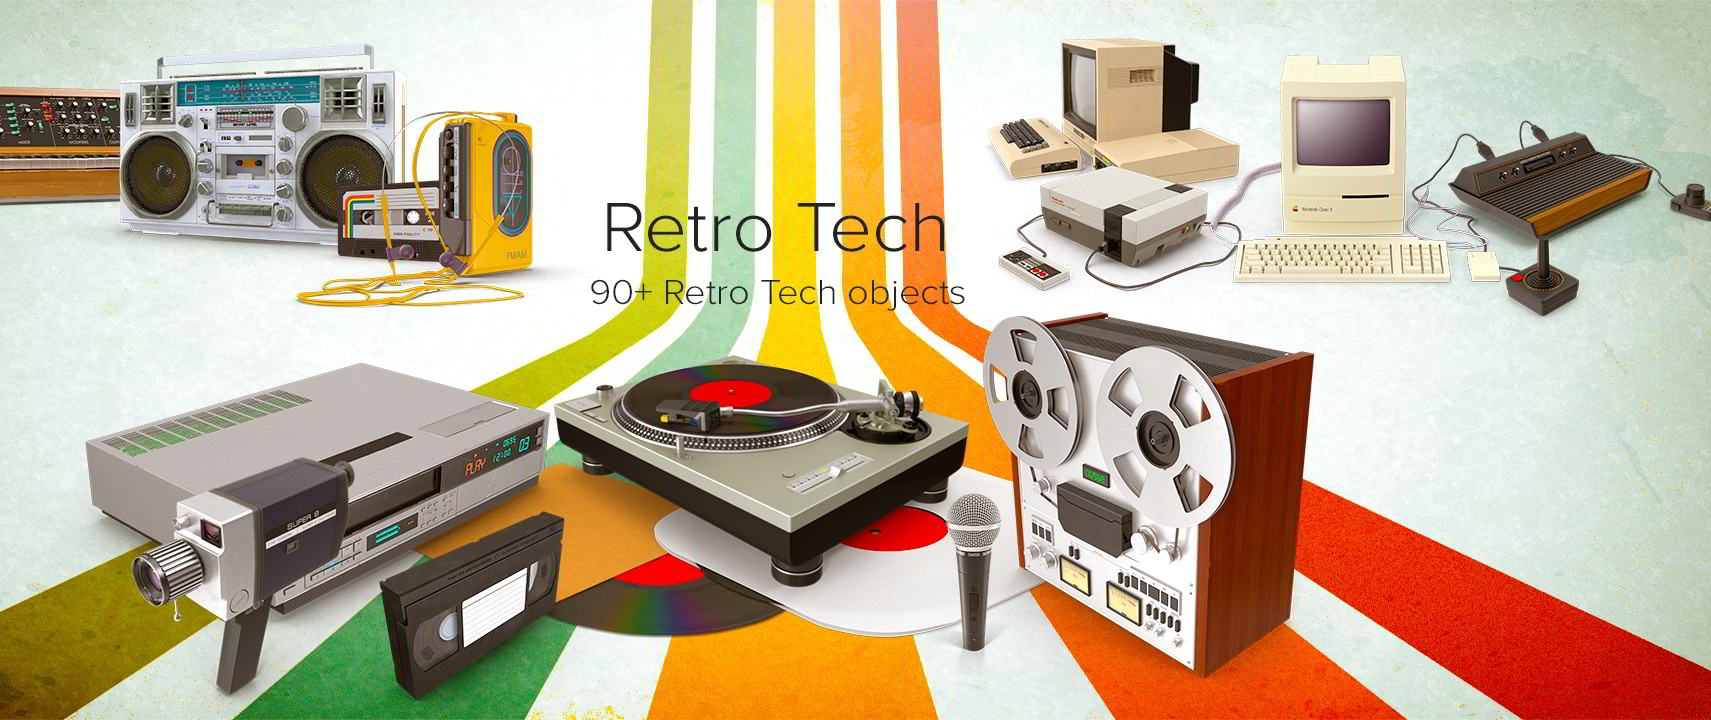 PixelSquid – Retro Tech Collection free download